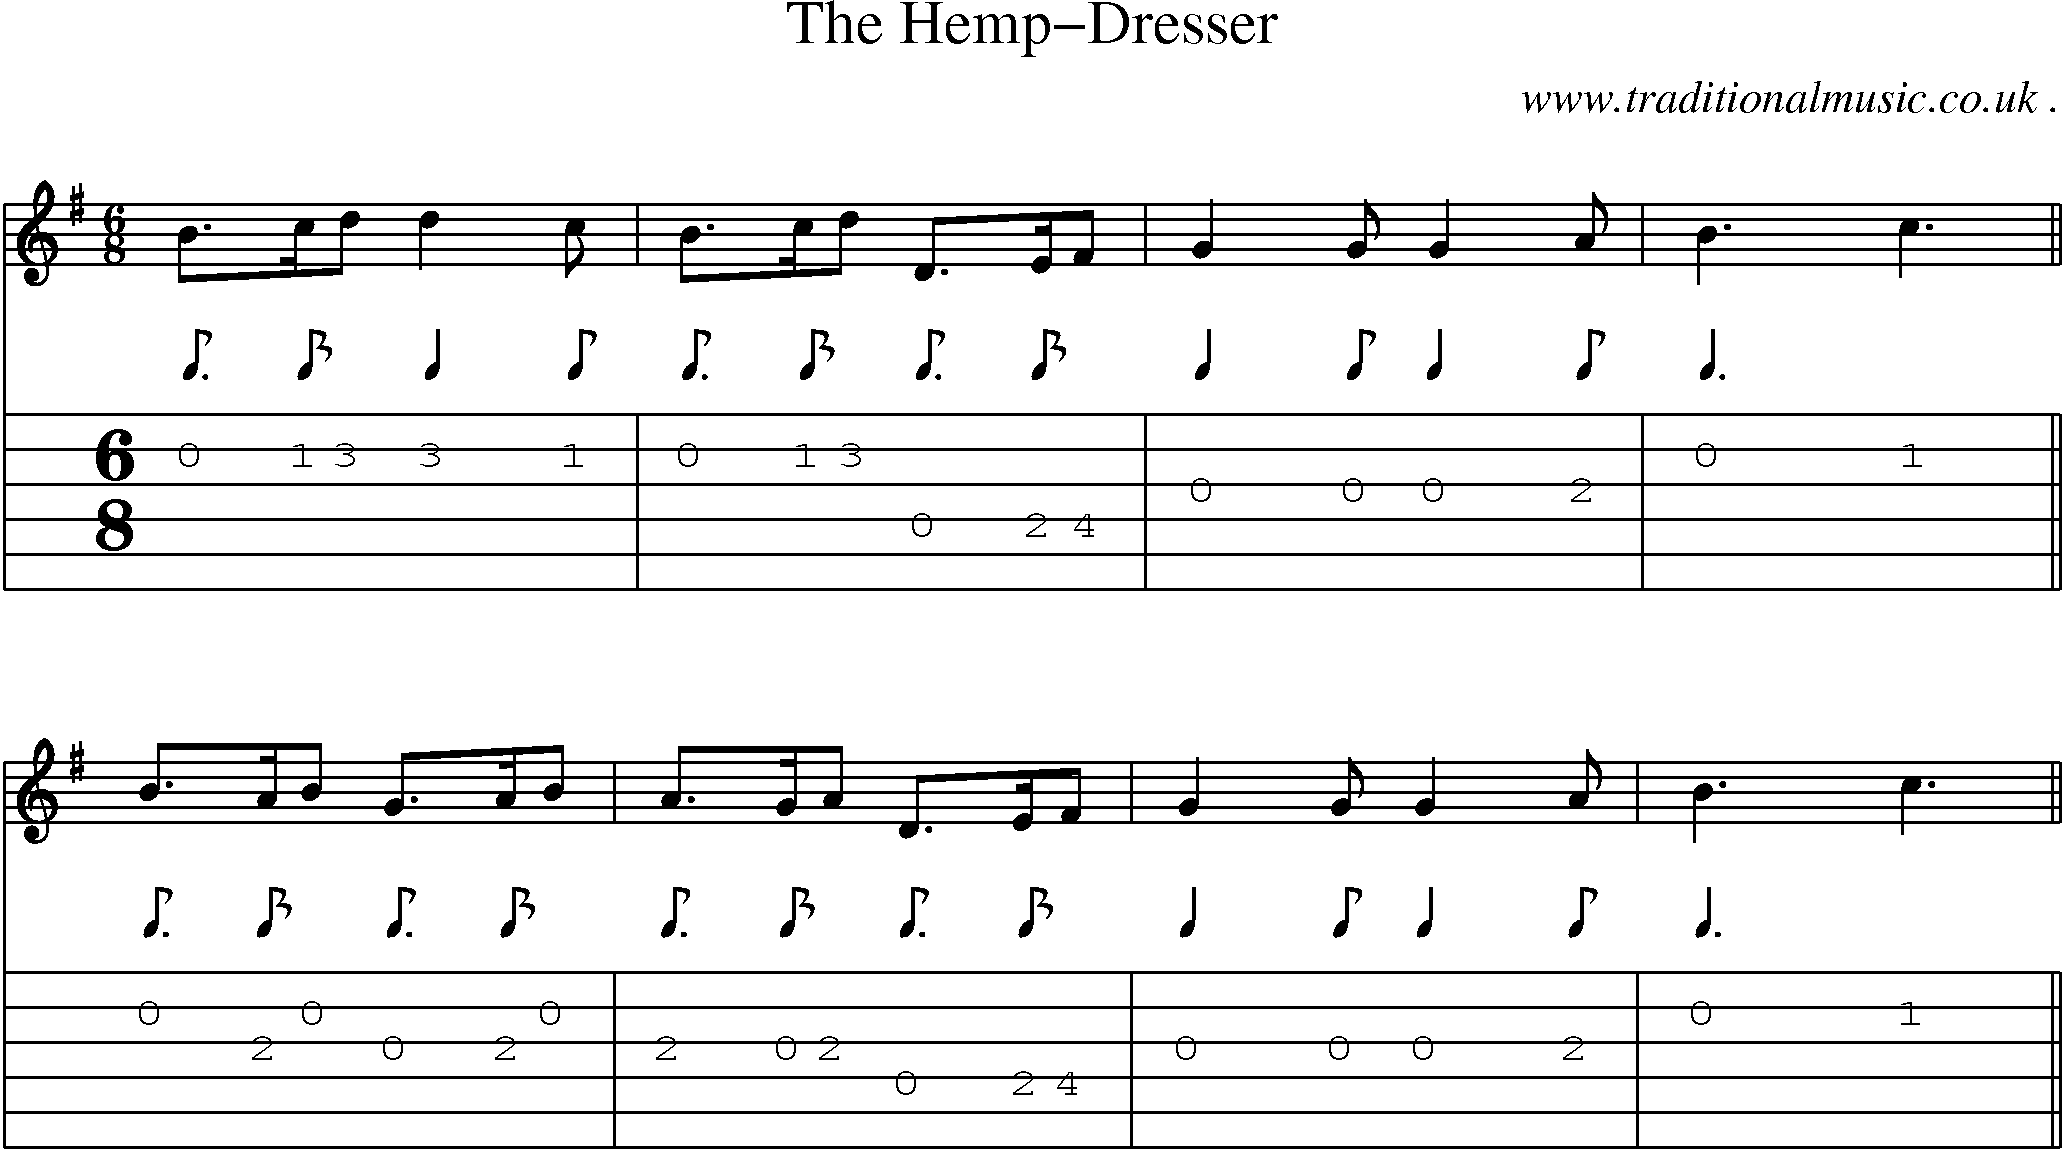 Sheet-Music and Guitar Tabs for The Hemp-dresser